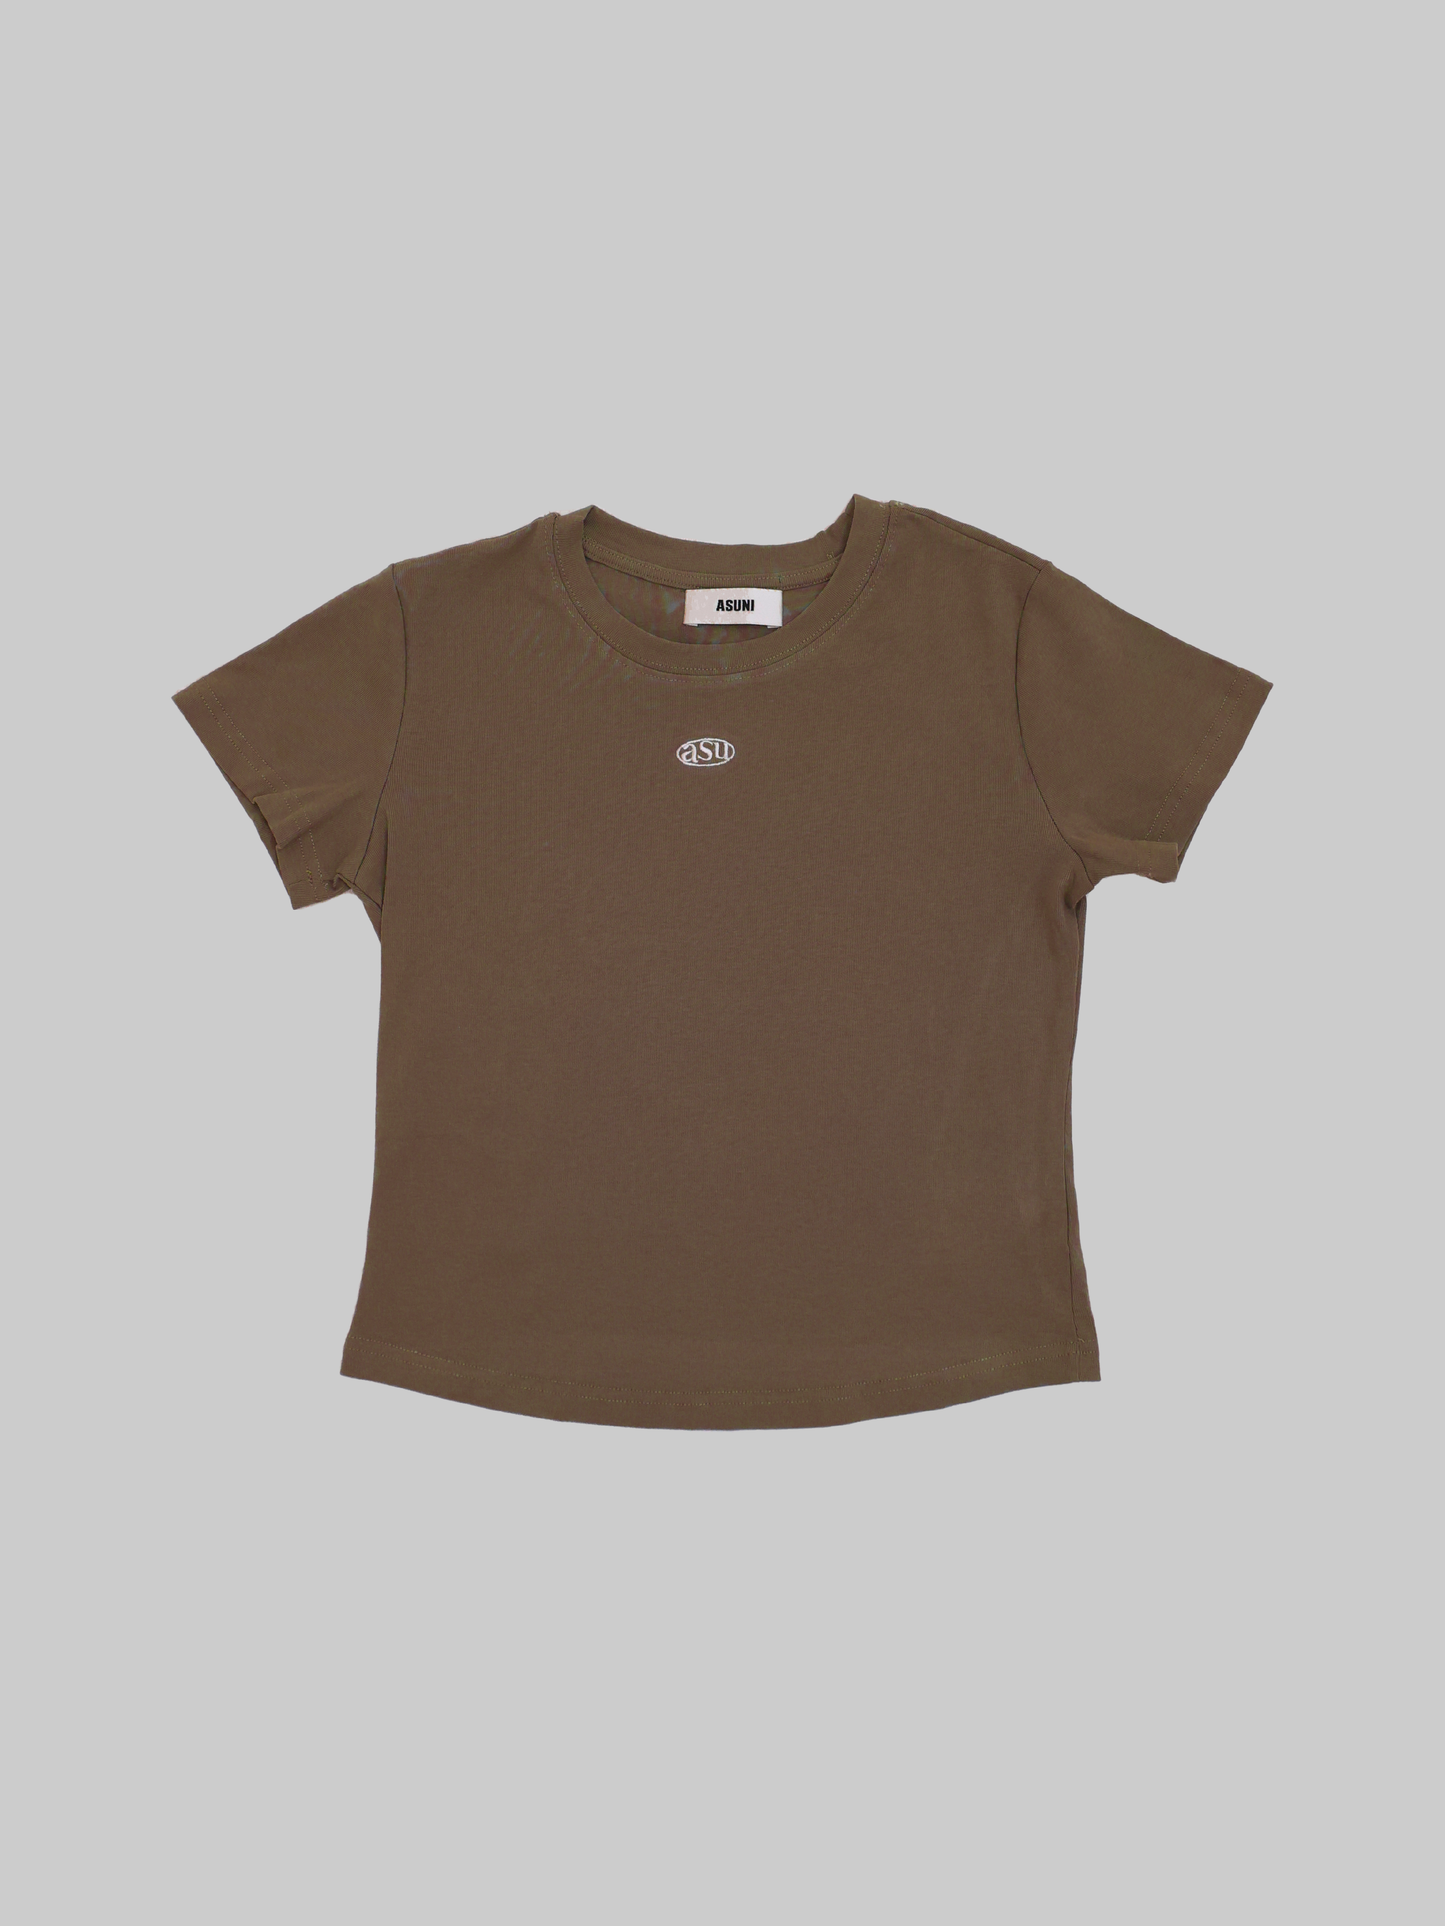 ASUNI ASU Logo Short Sleeve T-Shirt(brown)